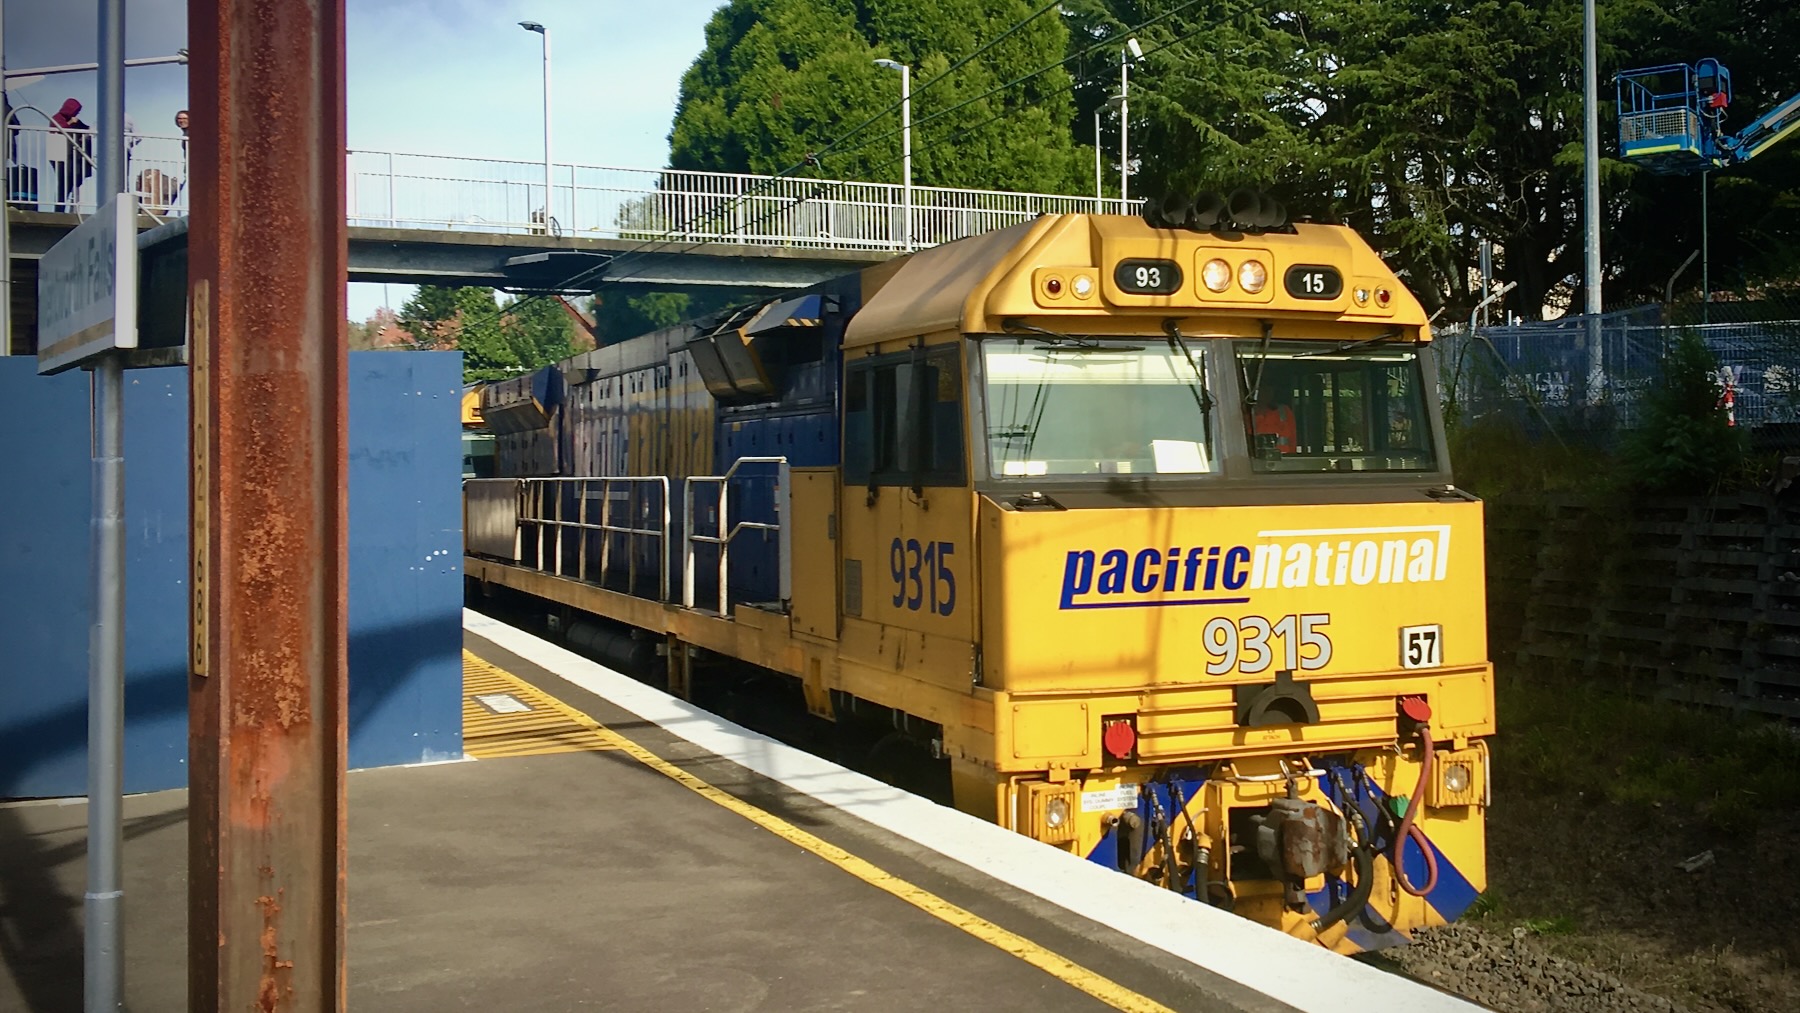 Pacific National locomotive 9315